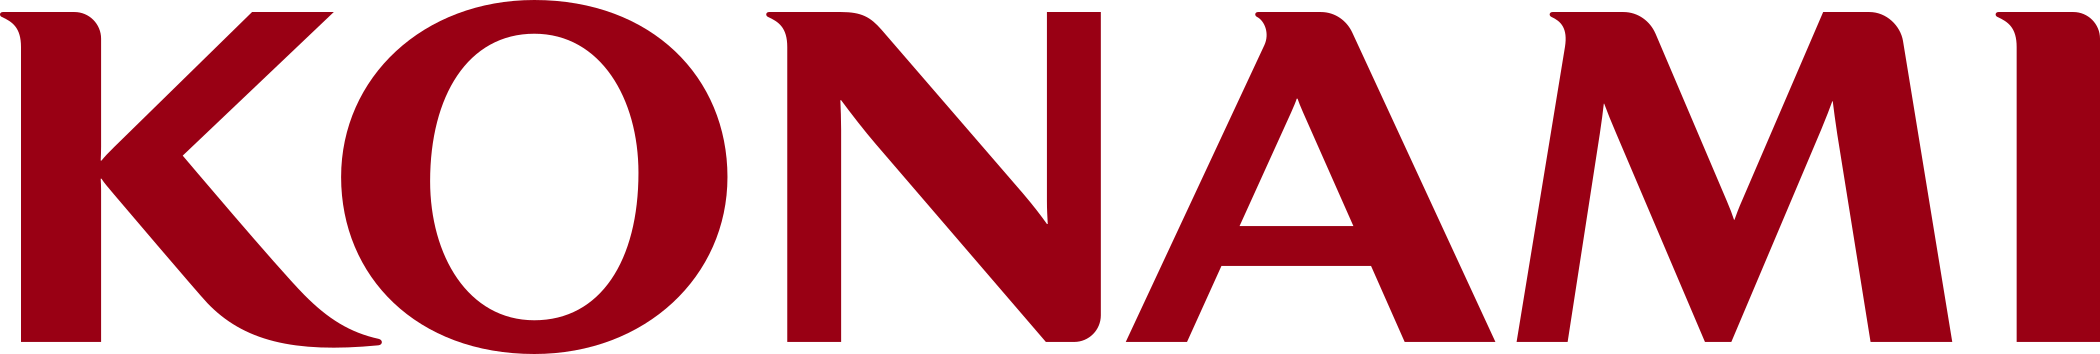 konami logo 1 - Konami Logo